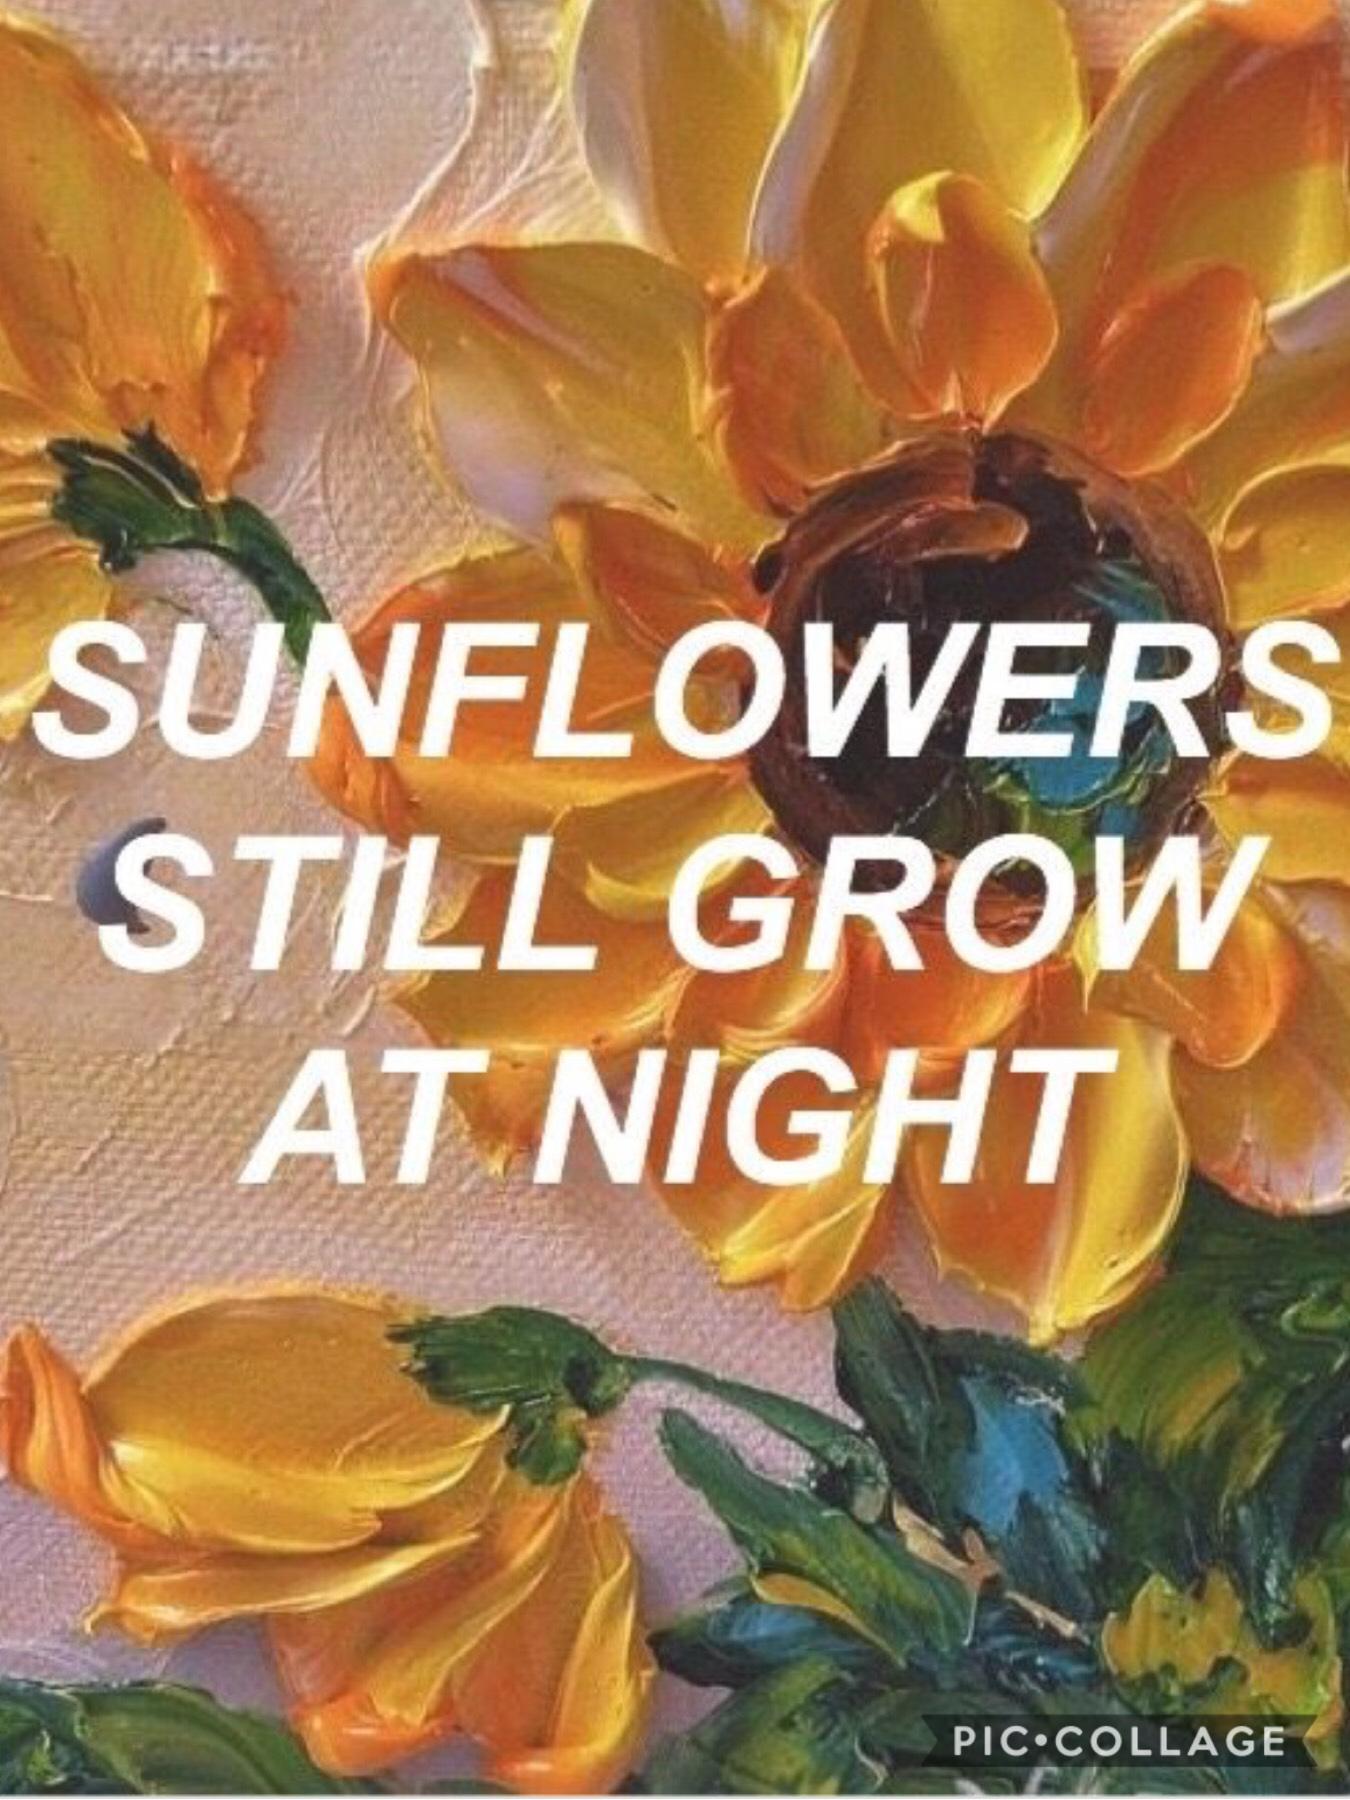 Sunflowers still grow at night! 
First post.
